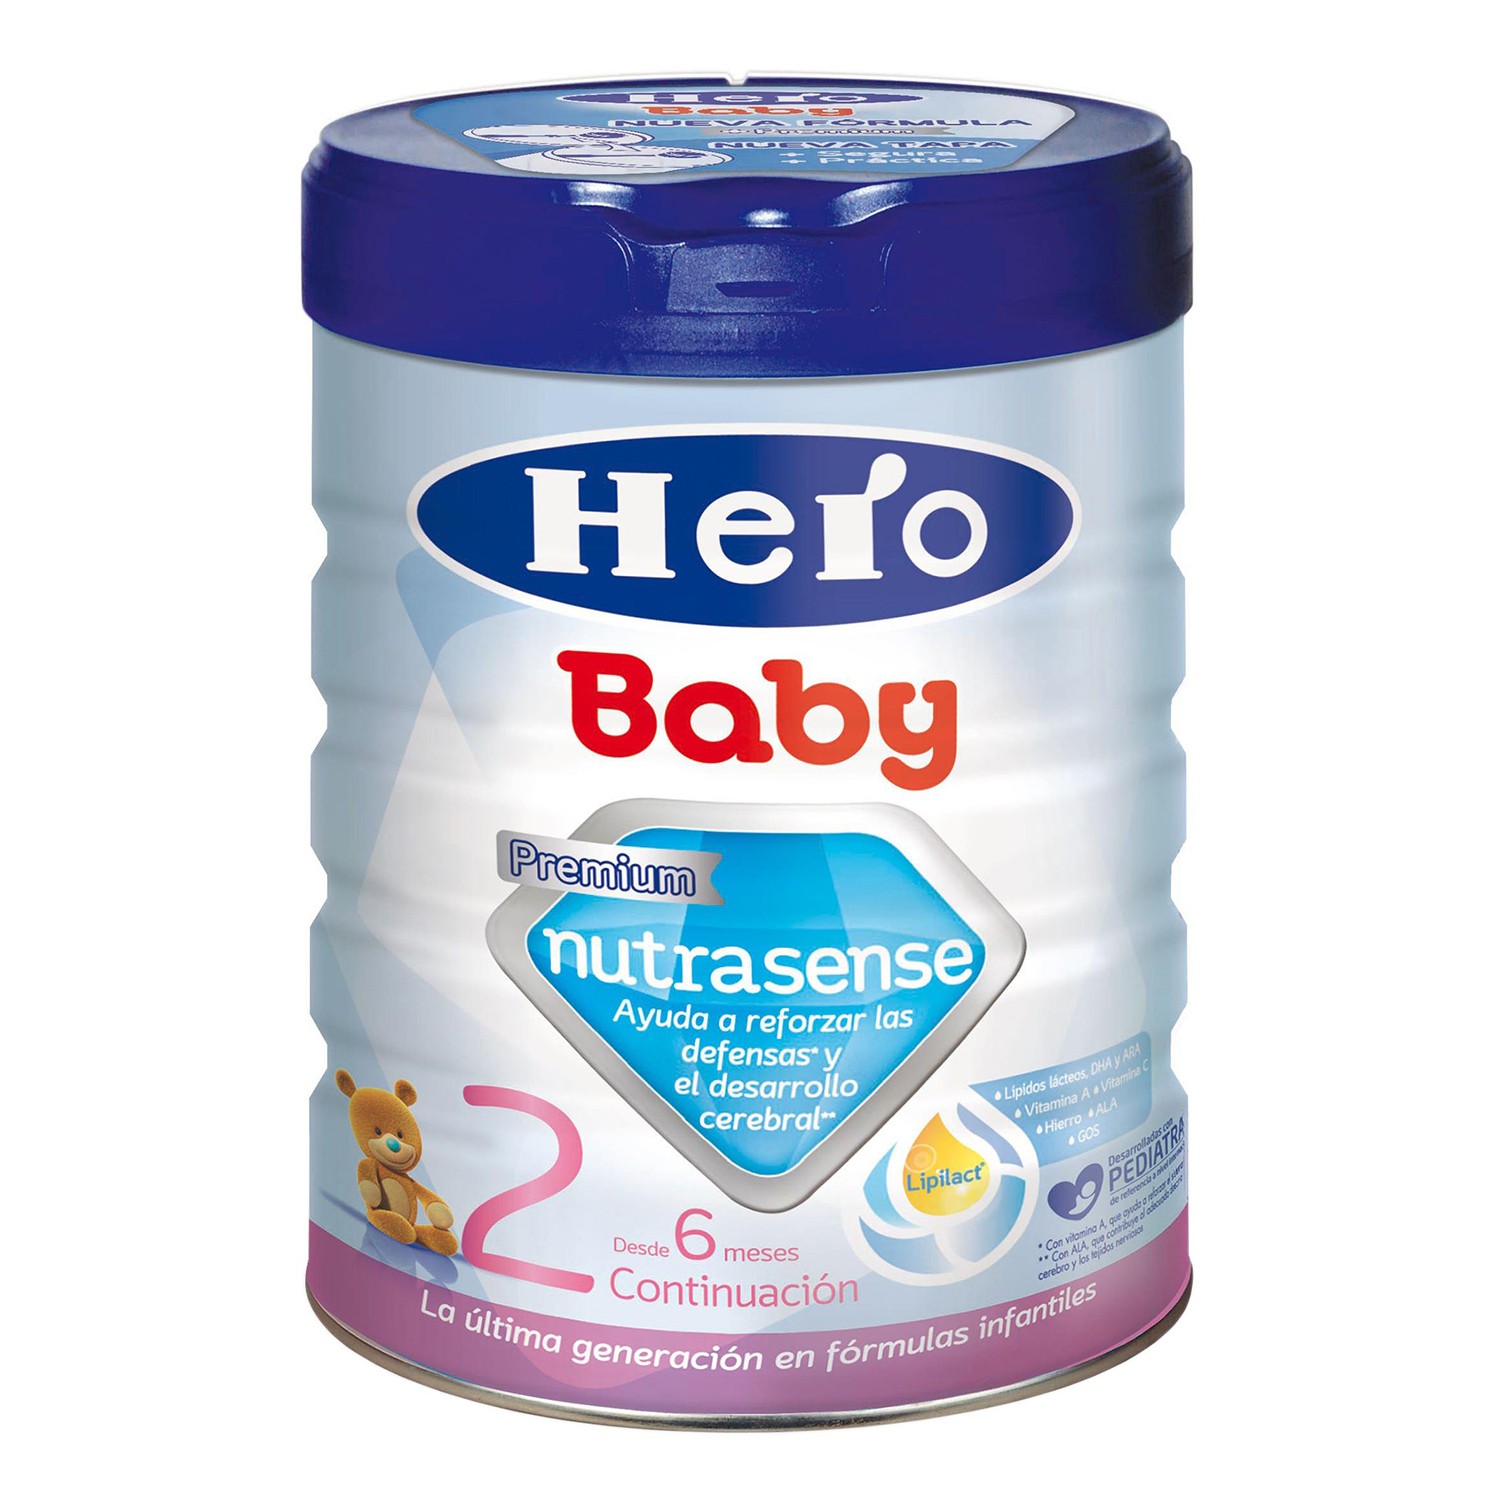 HERO Baby Premium Lapte Nutrasense 2 800g 6-12 luni